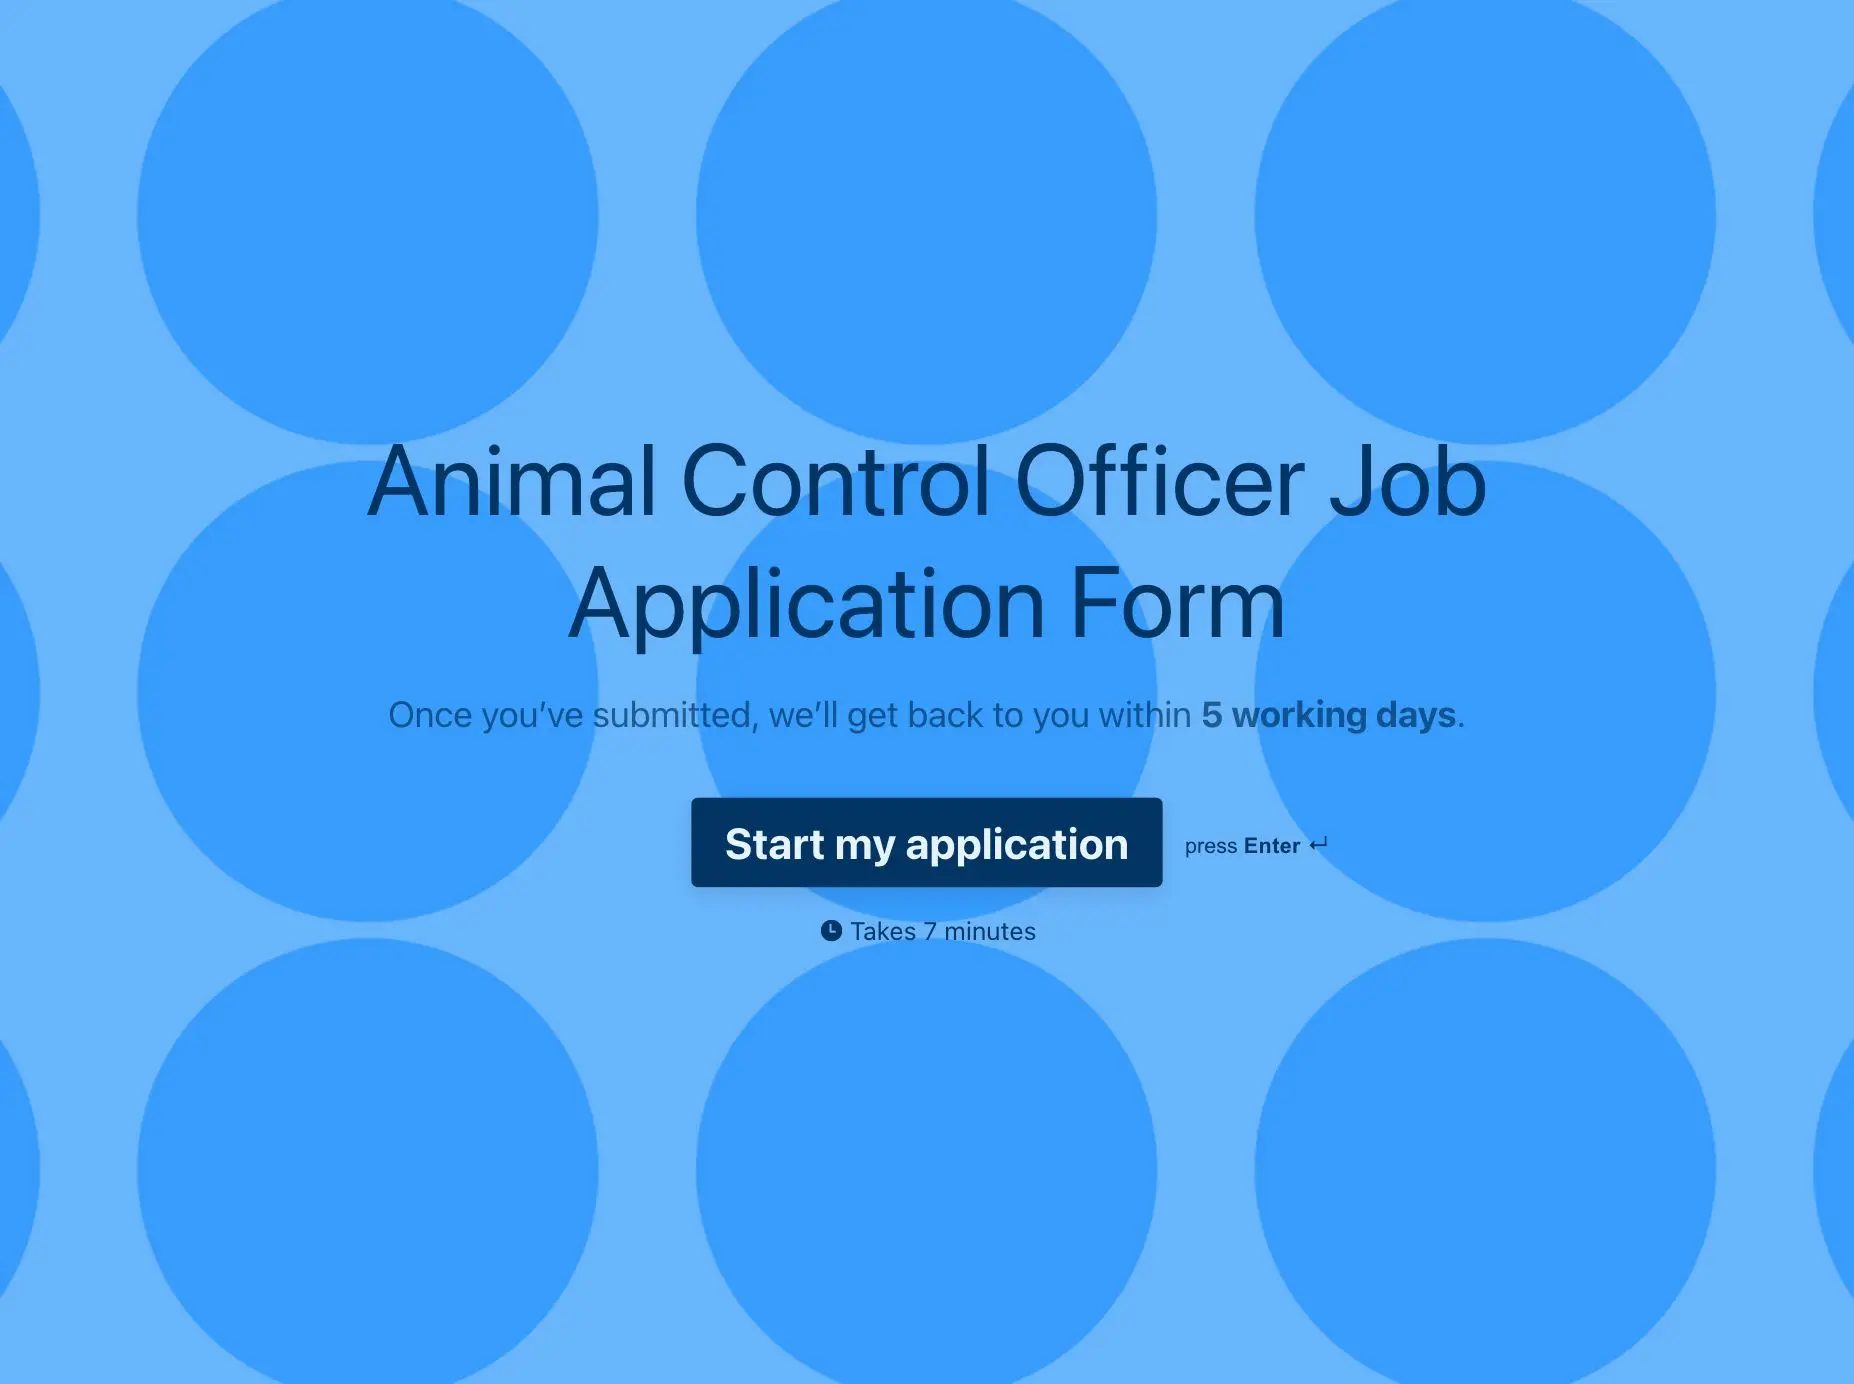 Animal Control Officer Job Application Form Template Hero